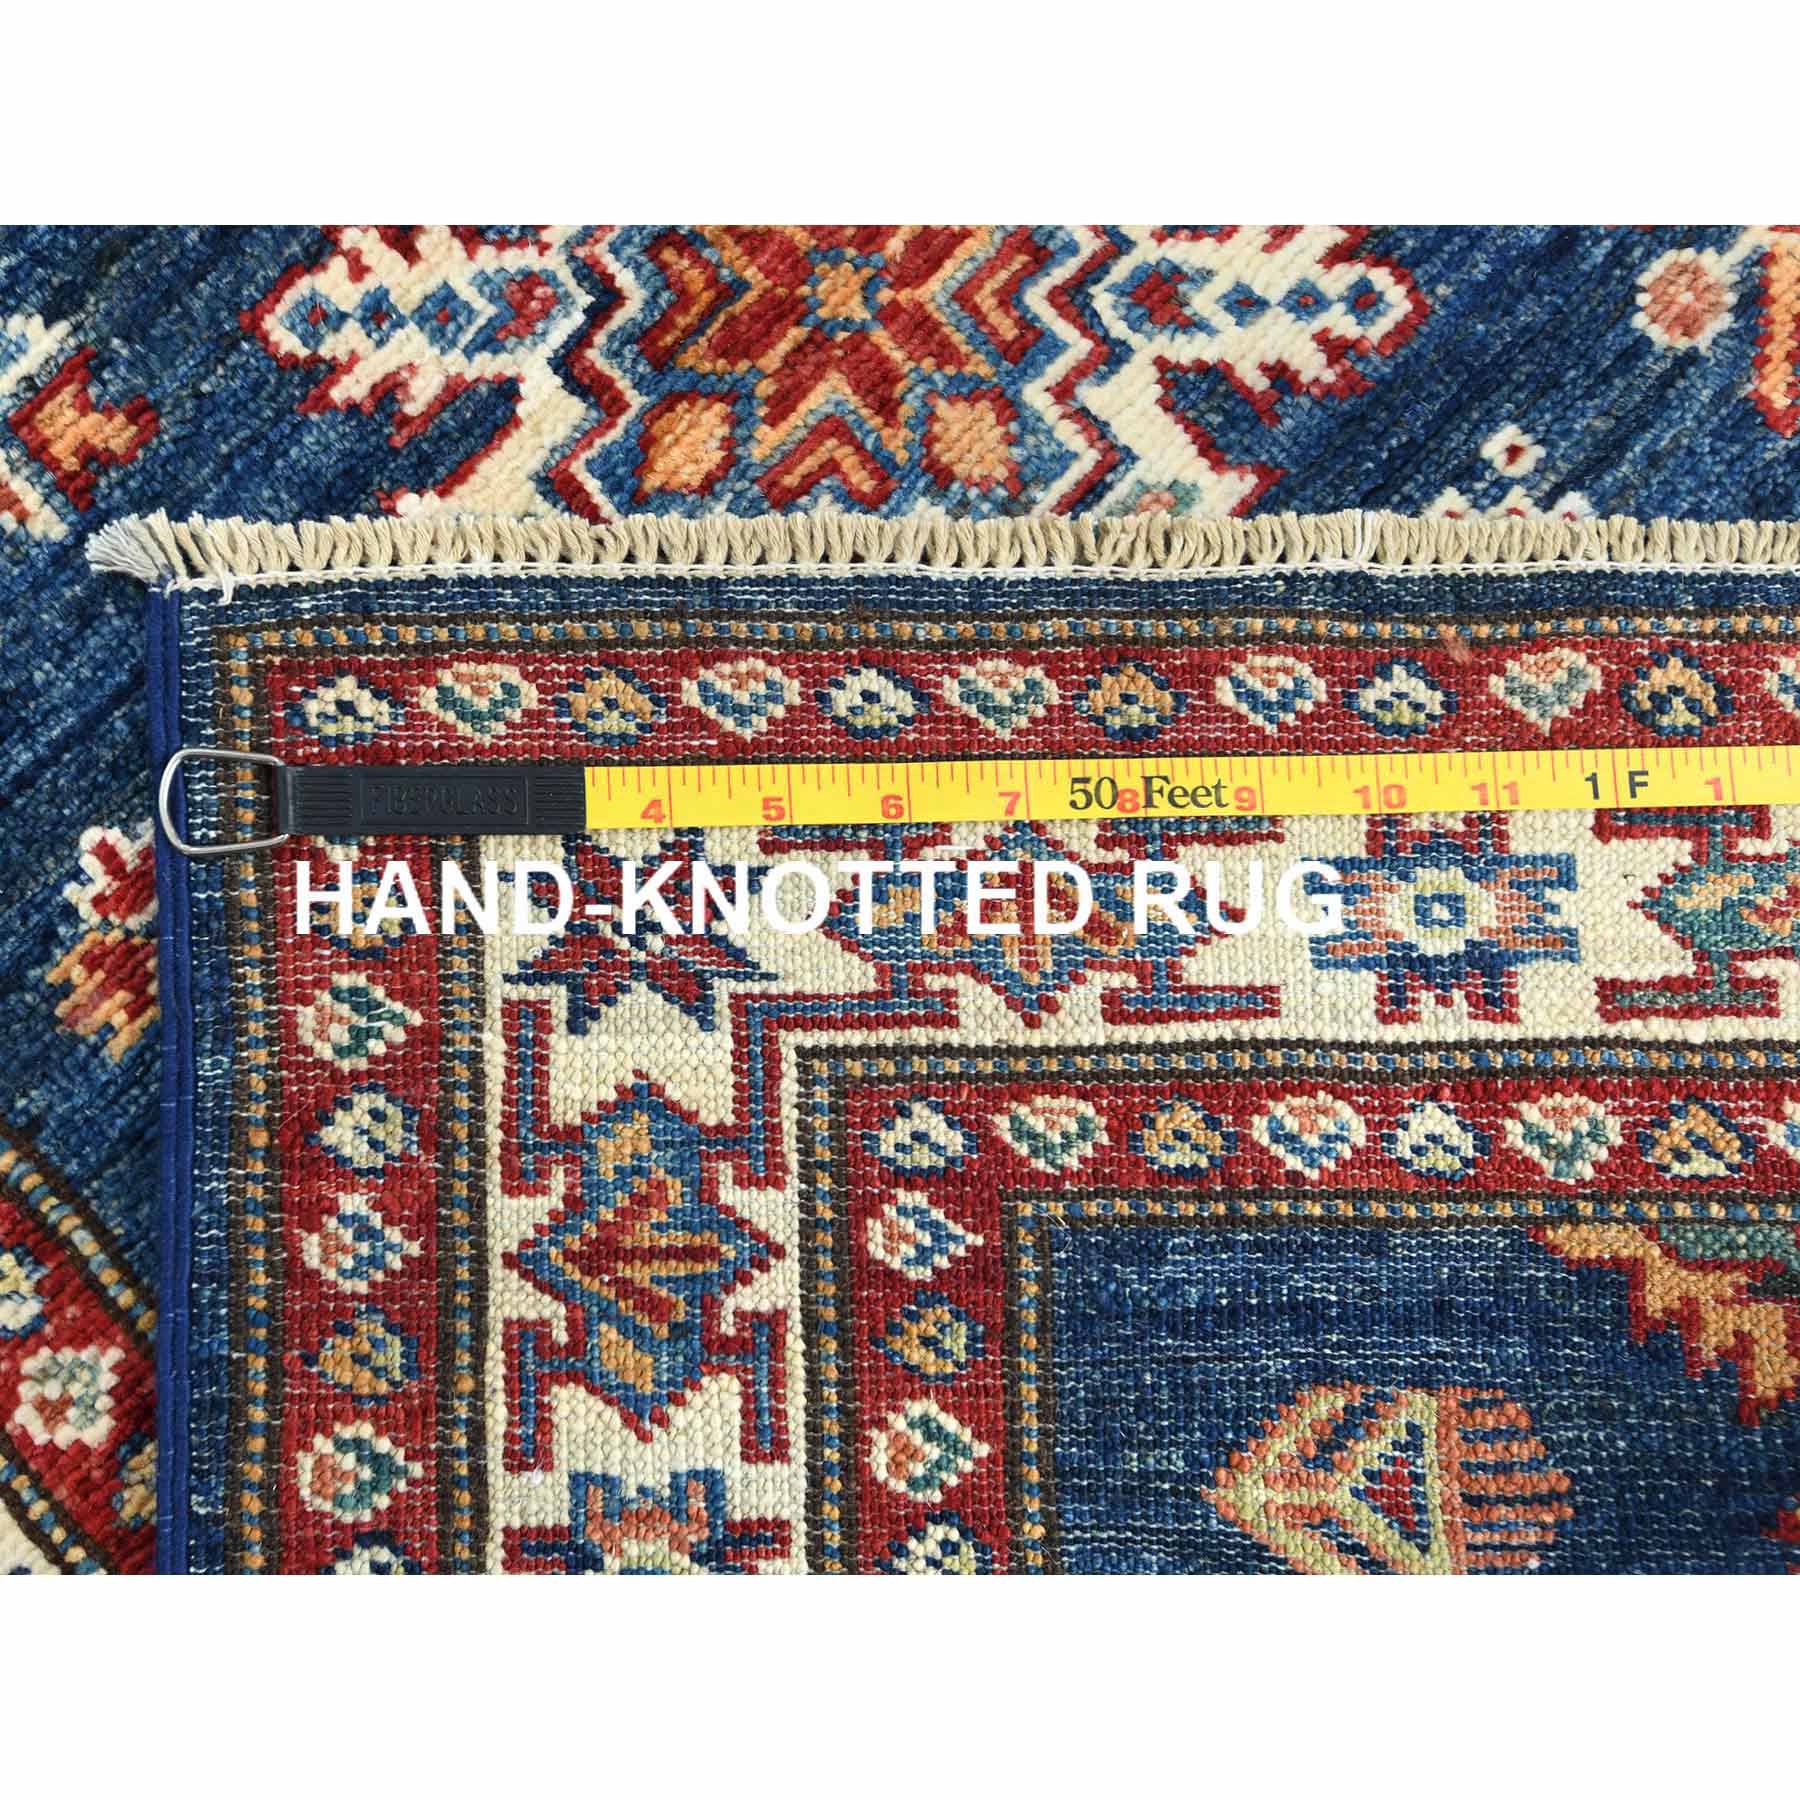 Kazak-Hand-Knotted-Rug-414545